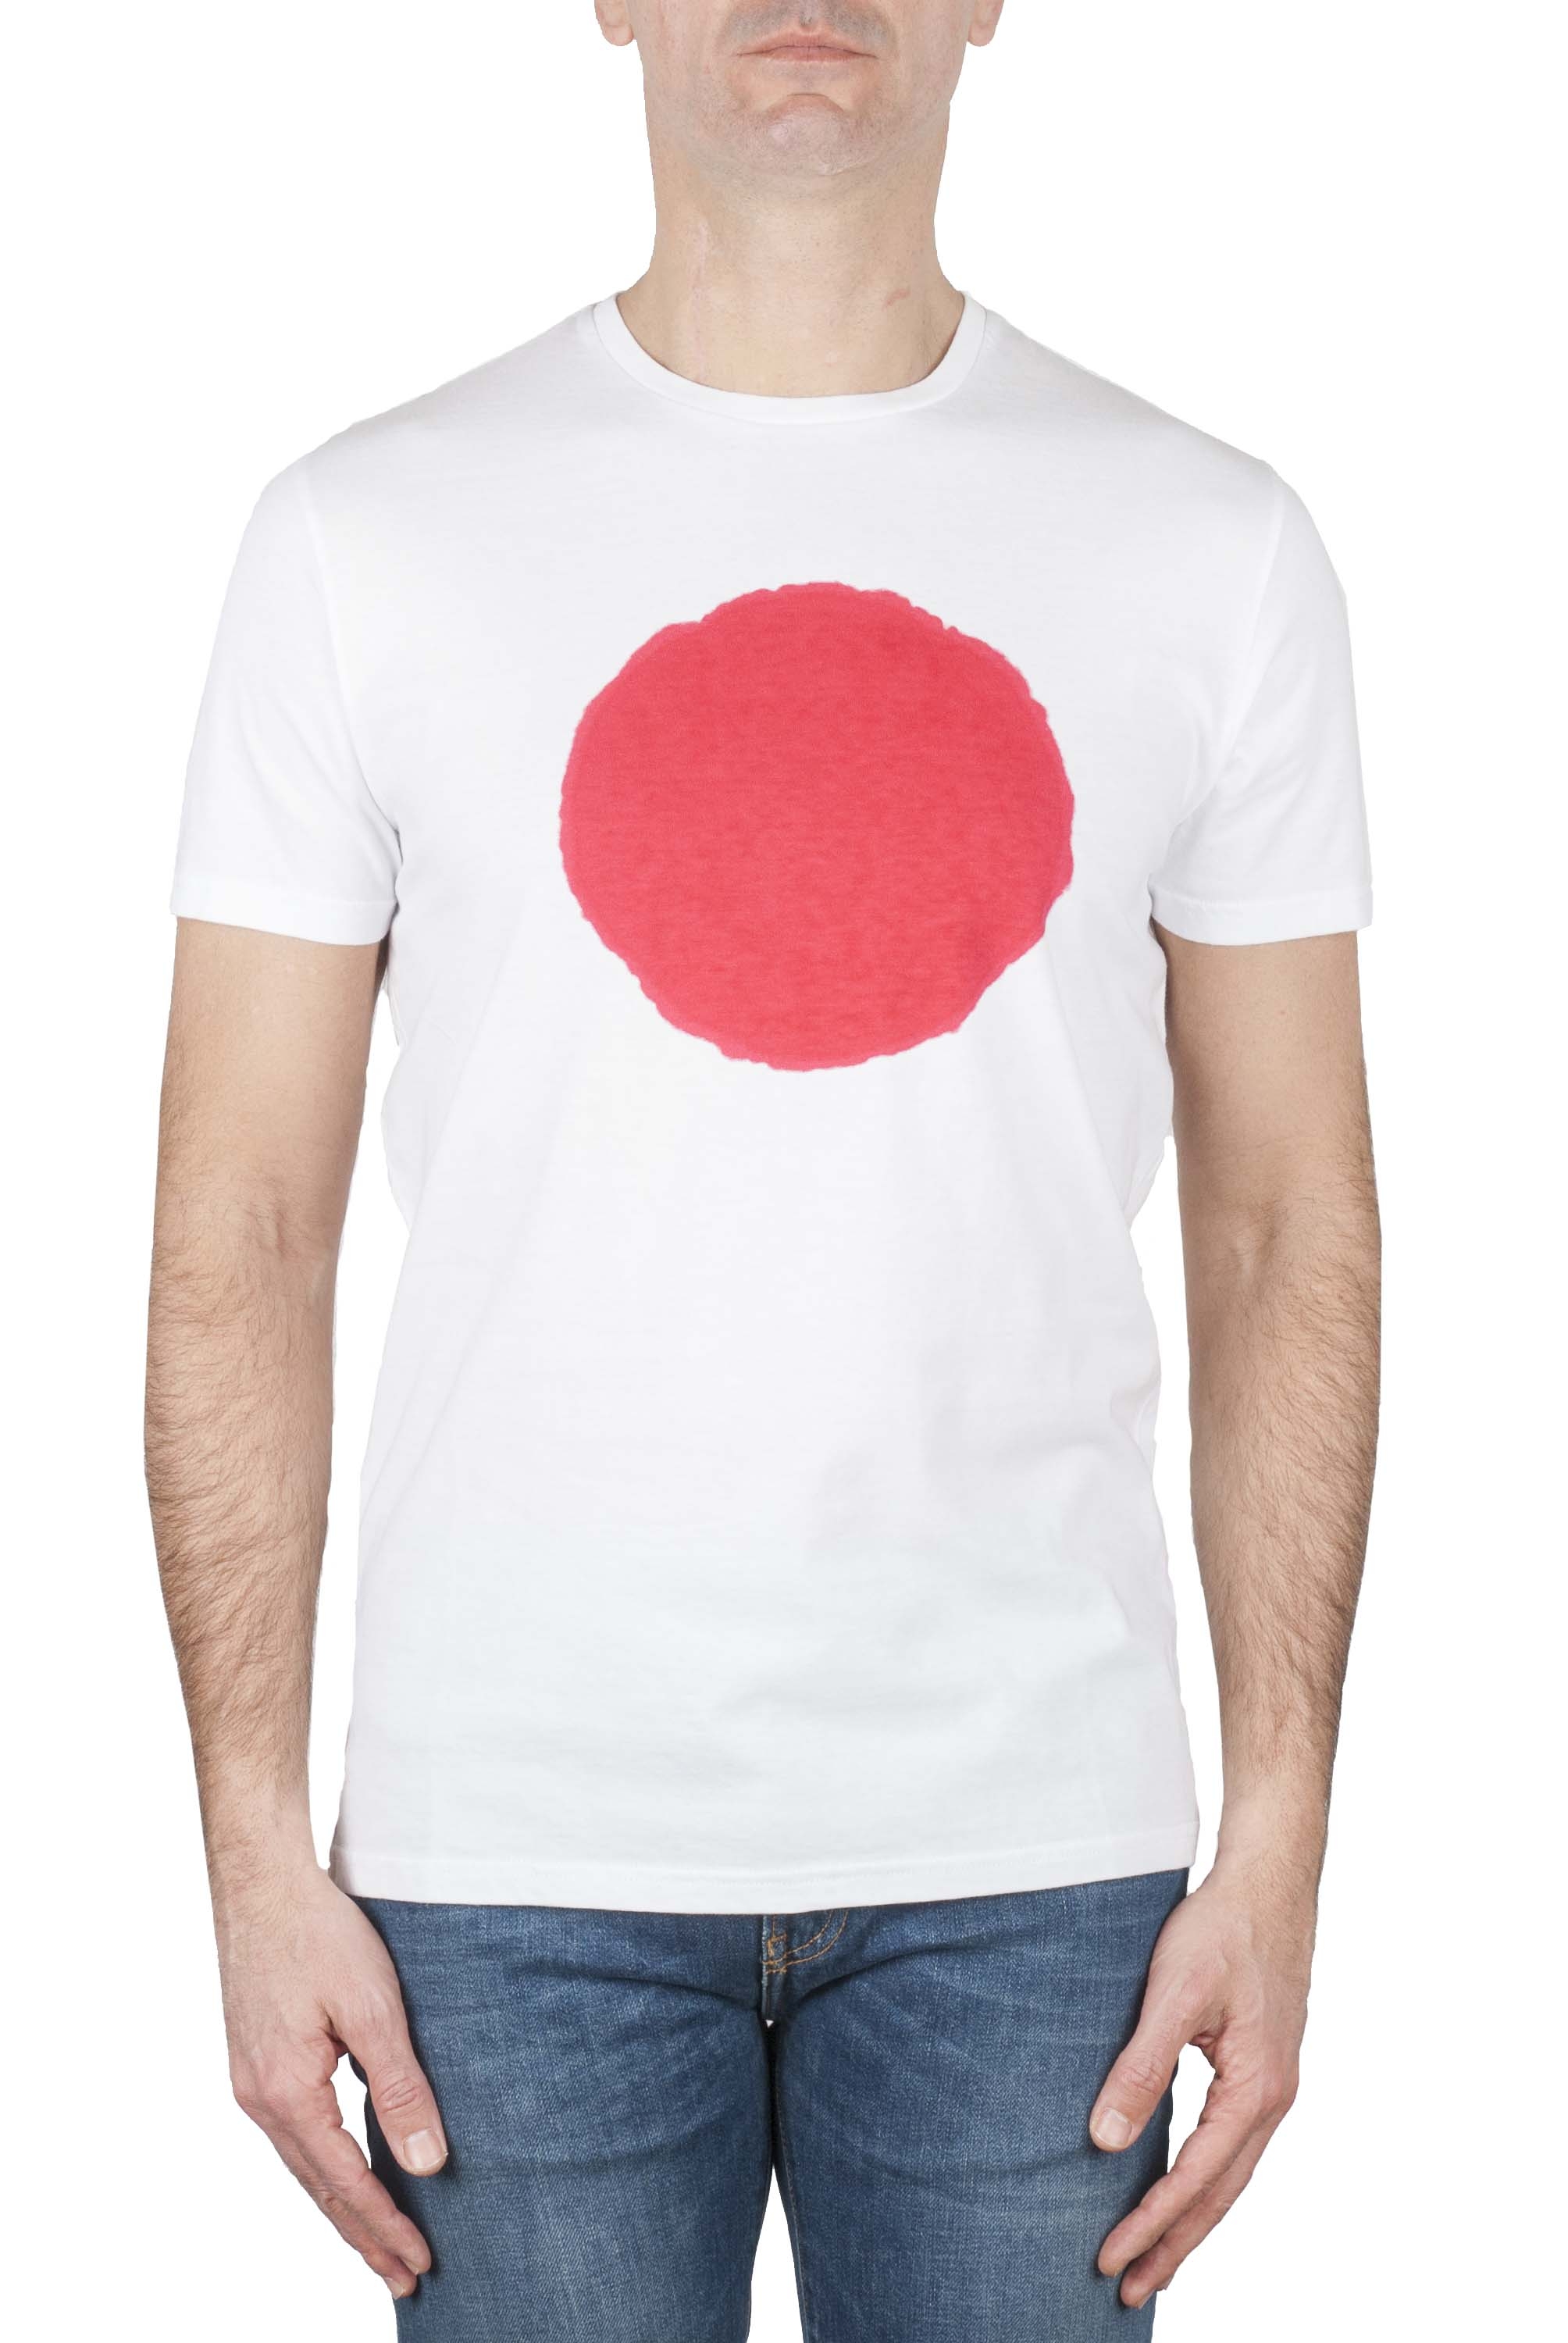 SBU 02848_2021SS 赤と白のプリントされたグラフィックの古典的な半袖綿ラウンドネックtシャツ 01